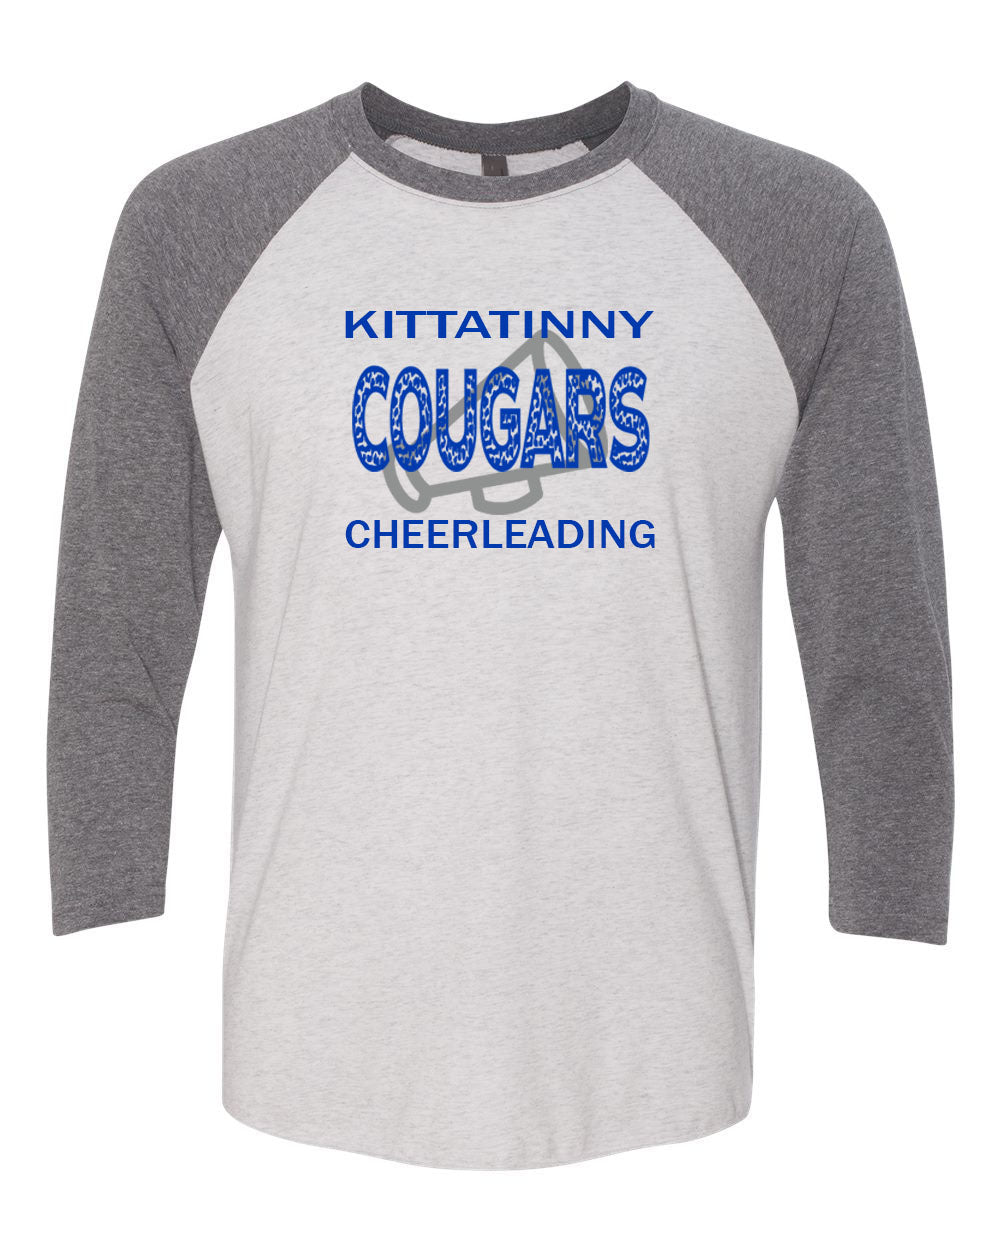 Kittatinny Cheer Design 10 raglan shirt